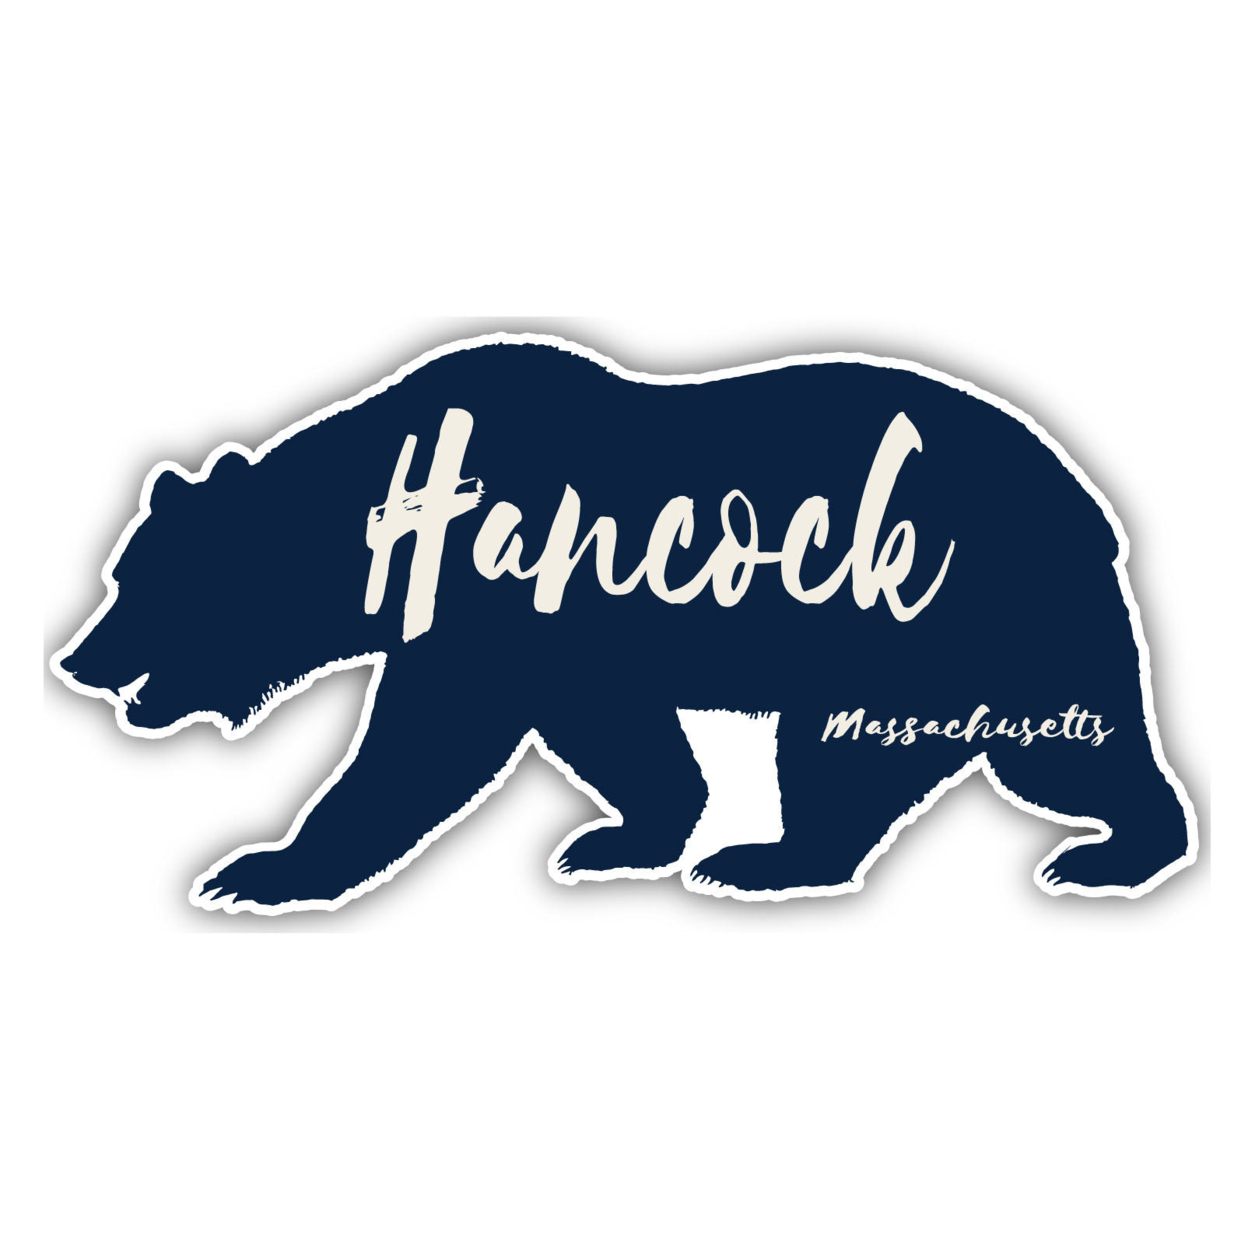 Hancock Massachusetts Souvenir Decorative Stickers (Choose Theme And Size) - Single Unit, 4-Inch, Tent